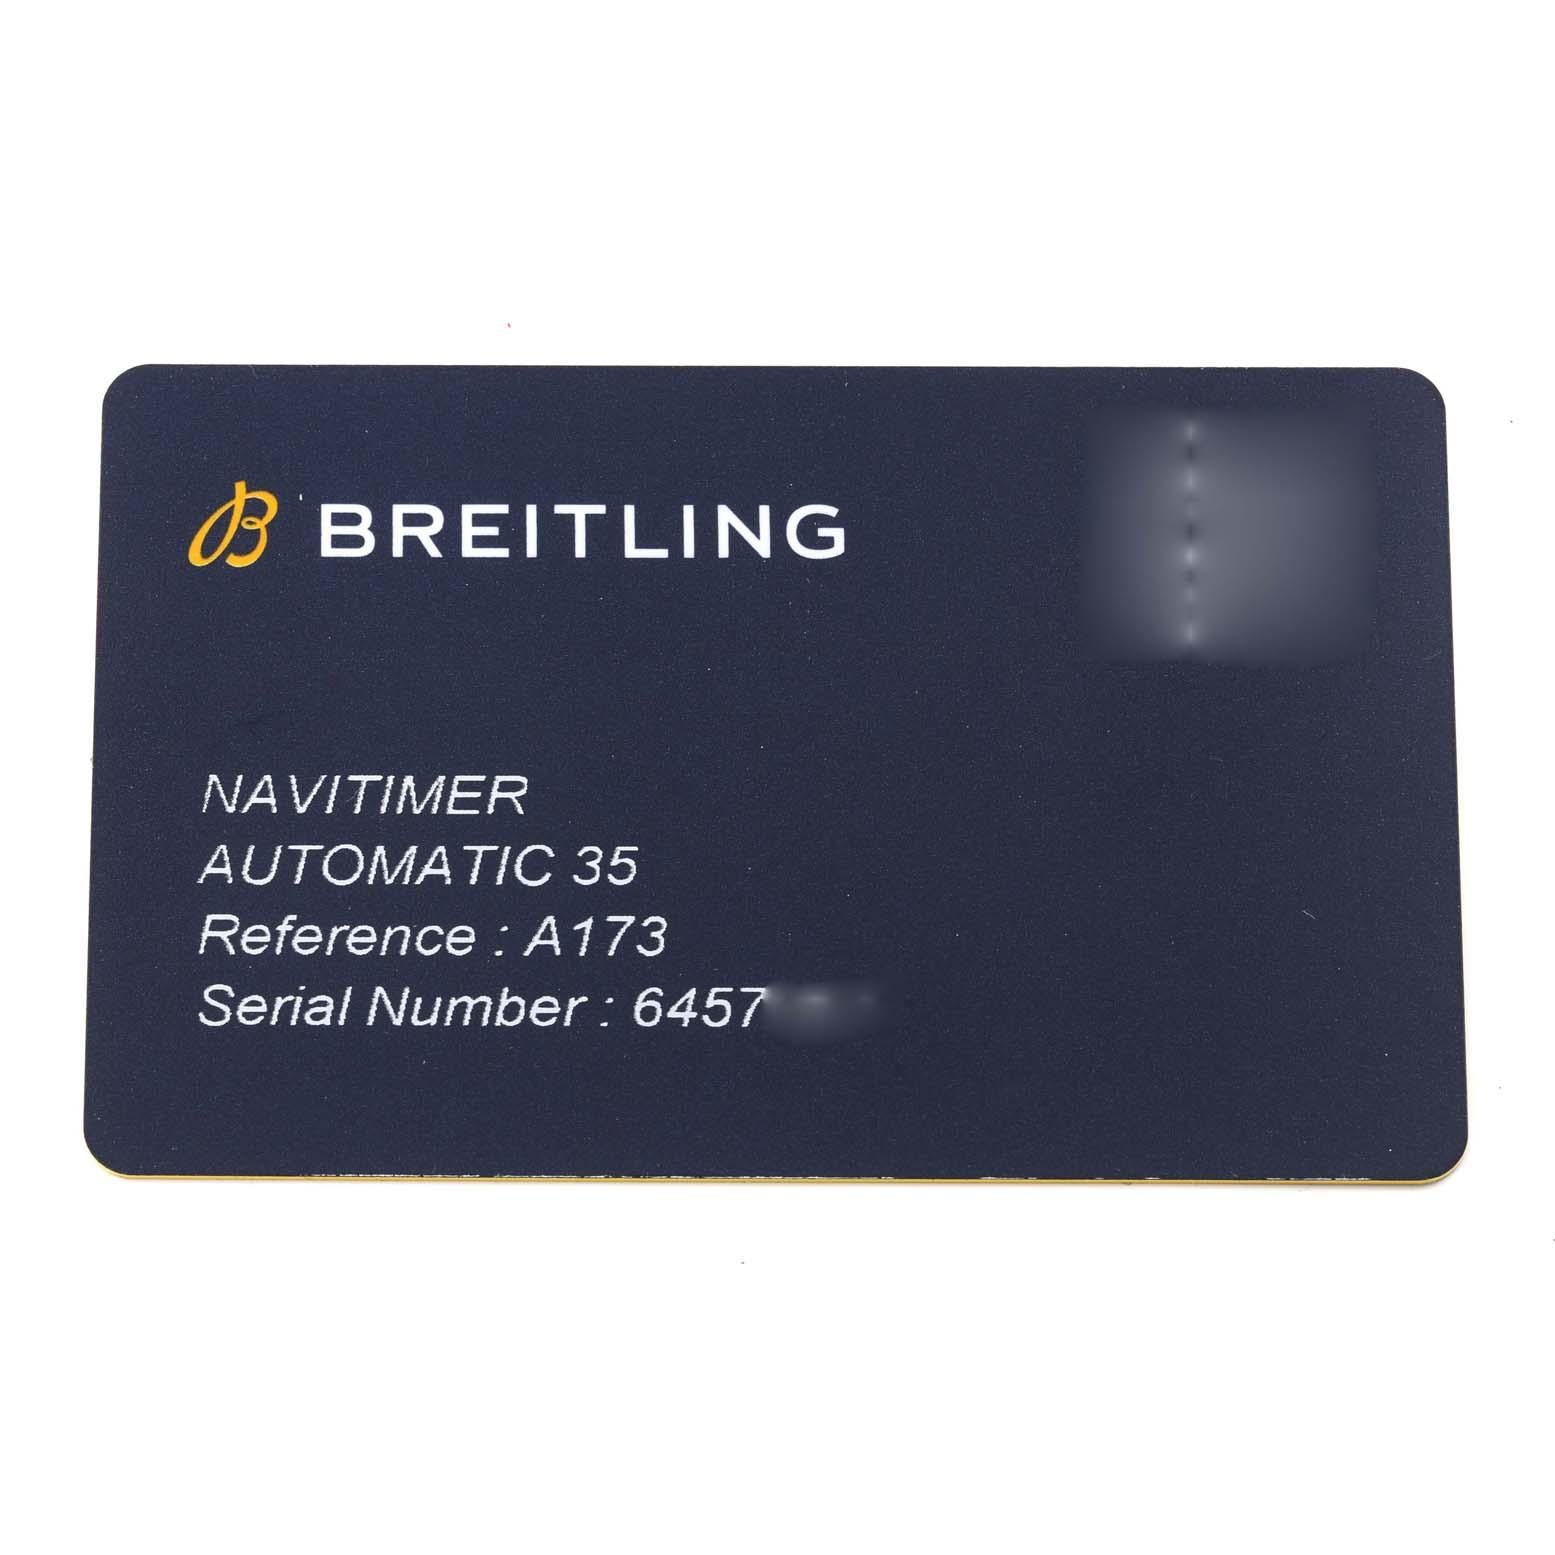 Breitling Navitimer Automatic 35 Salmon Dial Steel Ladies Watch A17395 Unworn 4